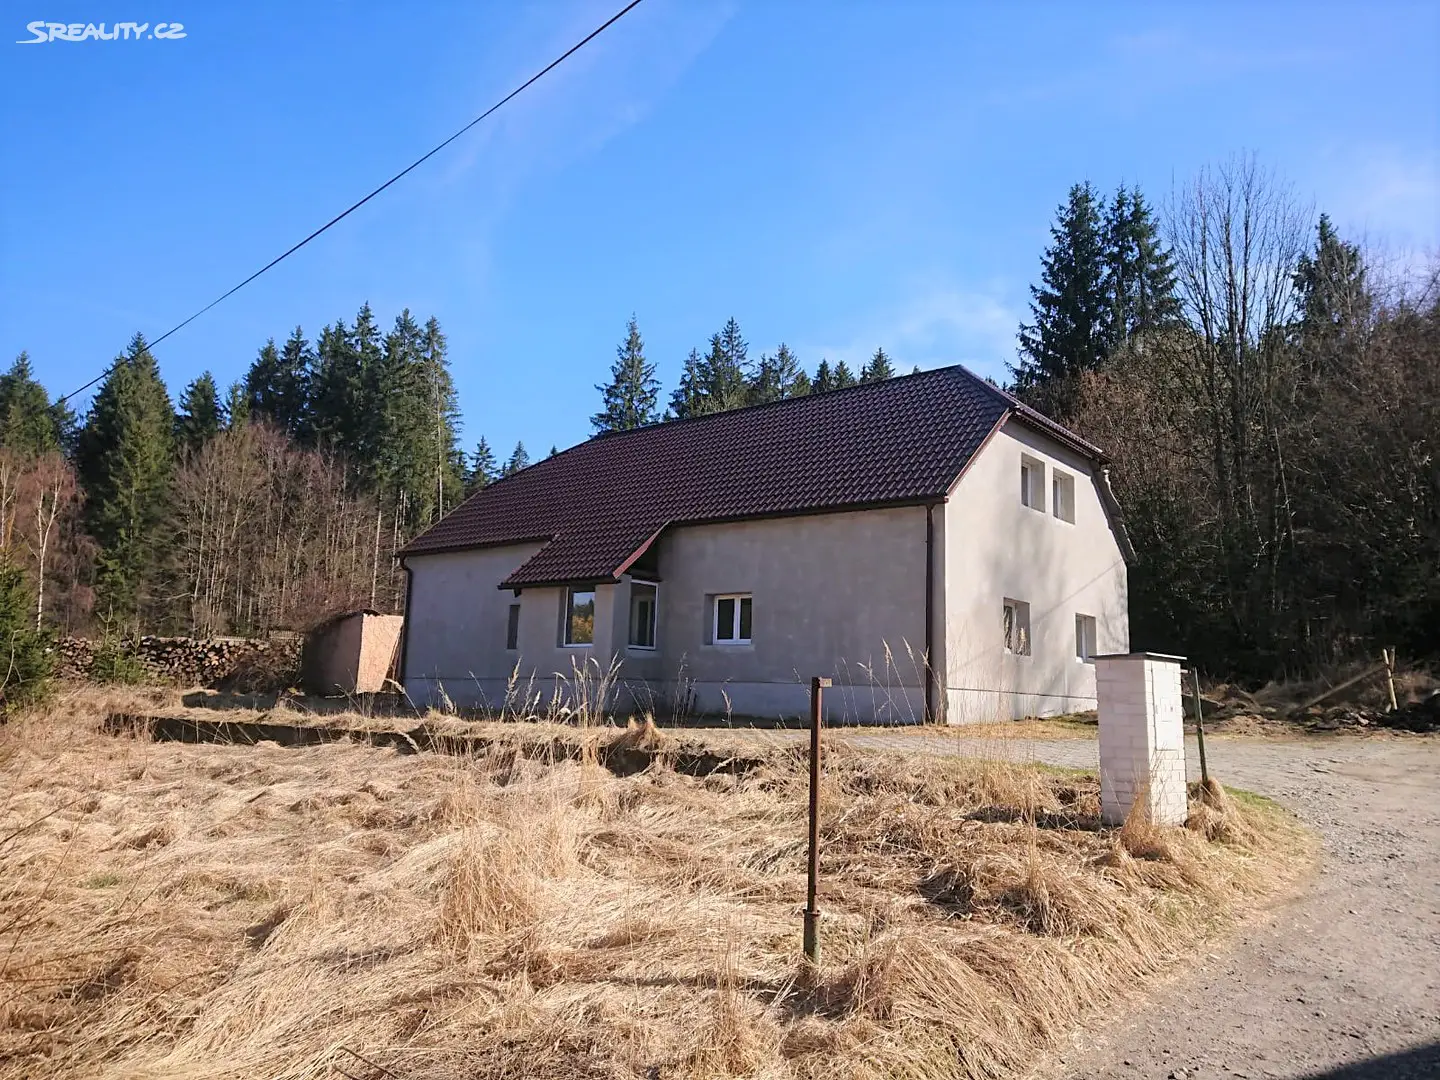 Prodej  rodinného domu 190 m², pozemek 993 m², Loučovice, okres Český Krumlov